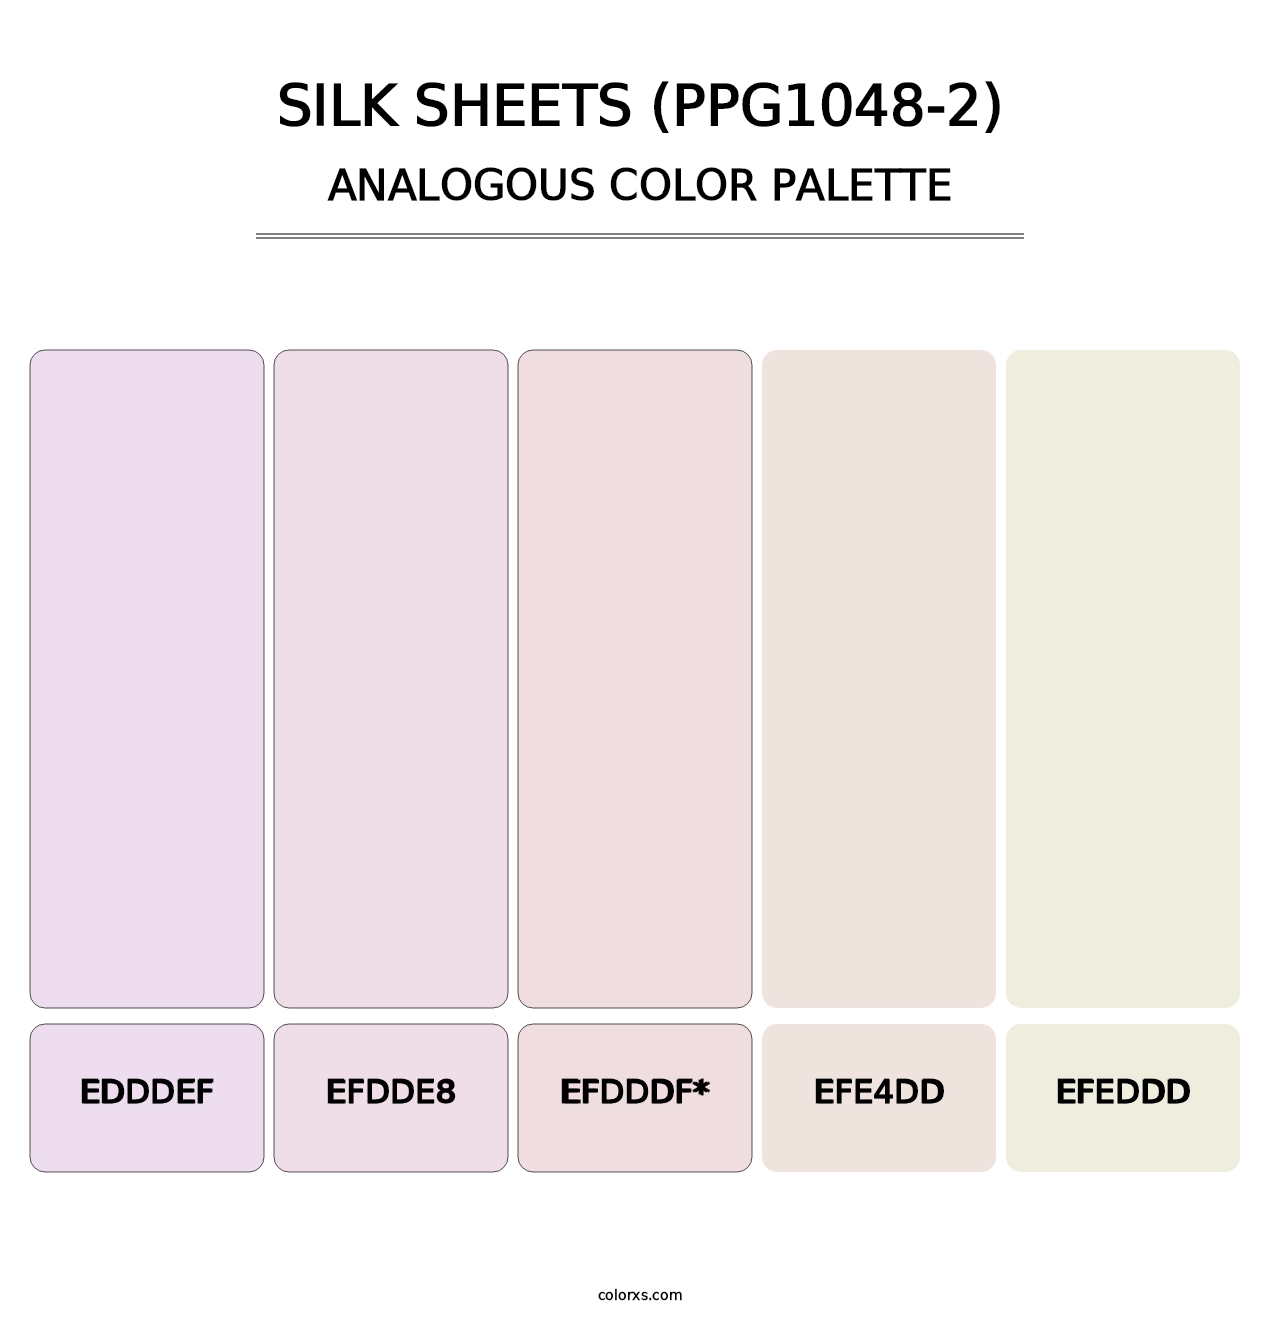 Silk Sheets (PPG1048-2) - Analogous Color Palette